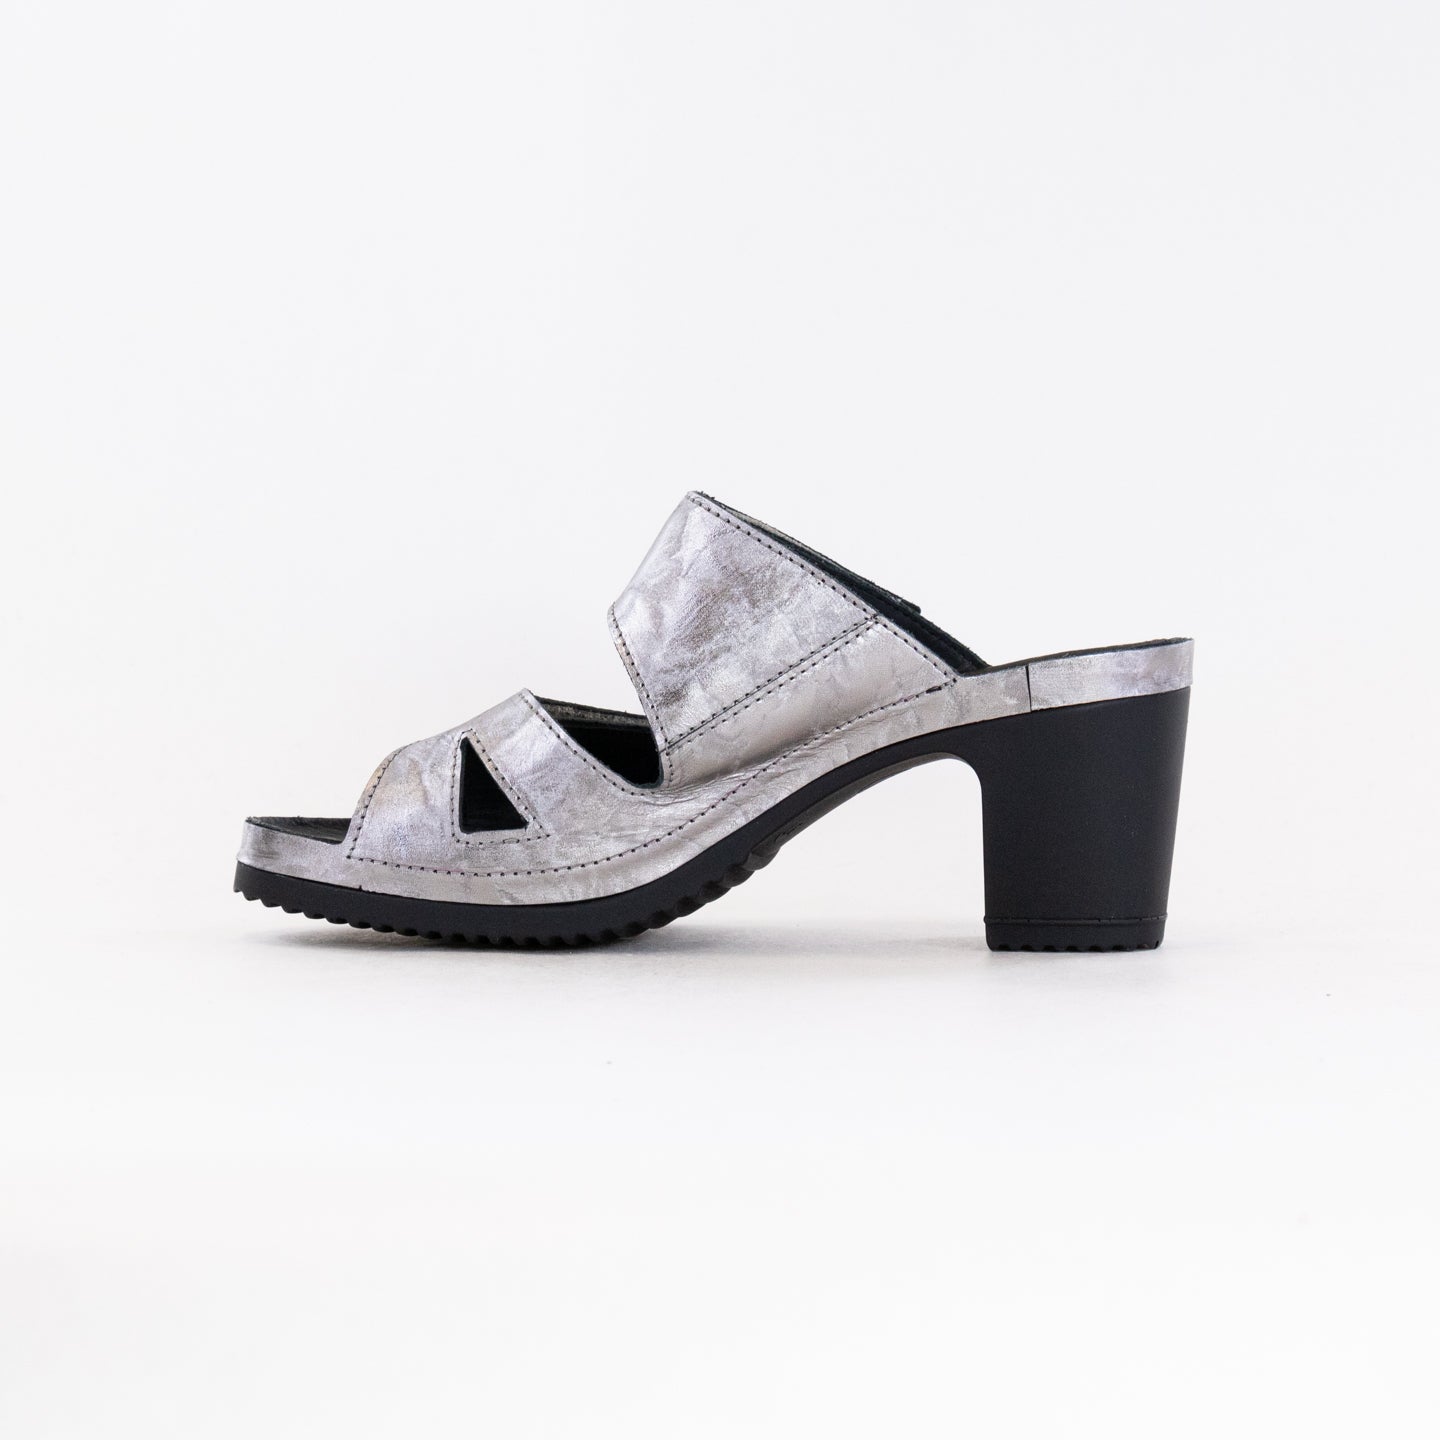 Vital Petra Mule Sandal (Women's) - Platinum Metallic Leather